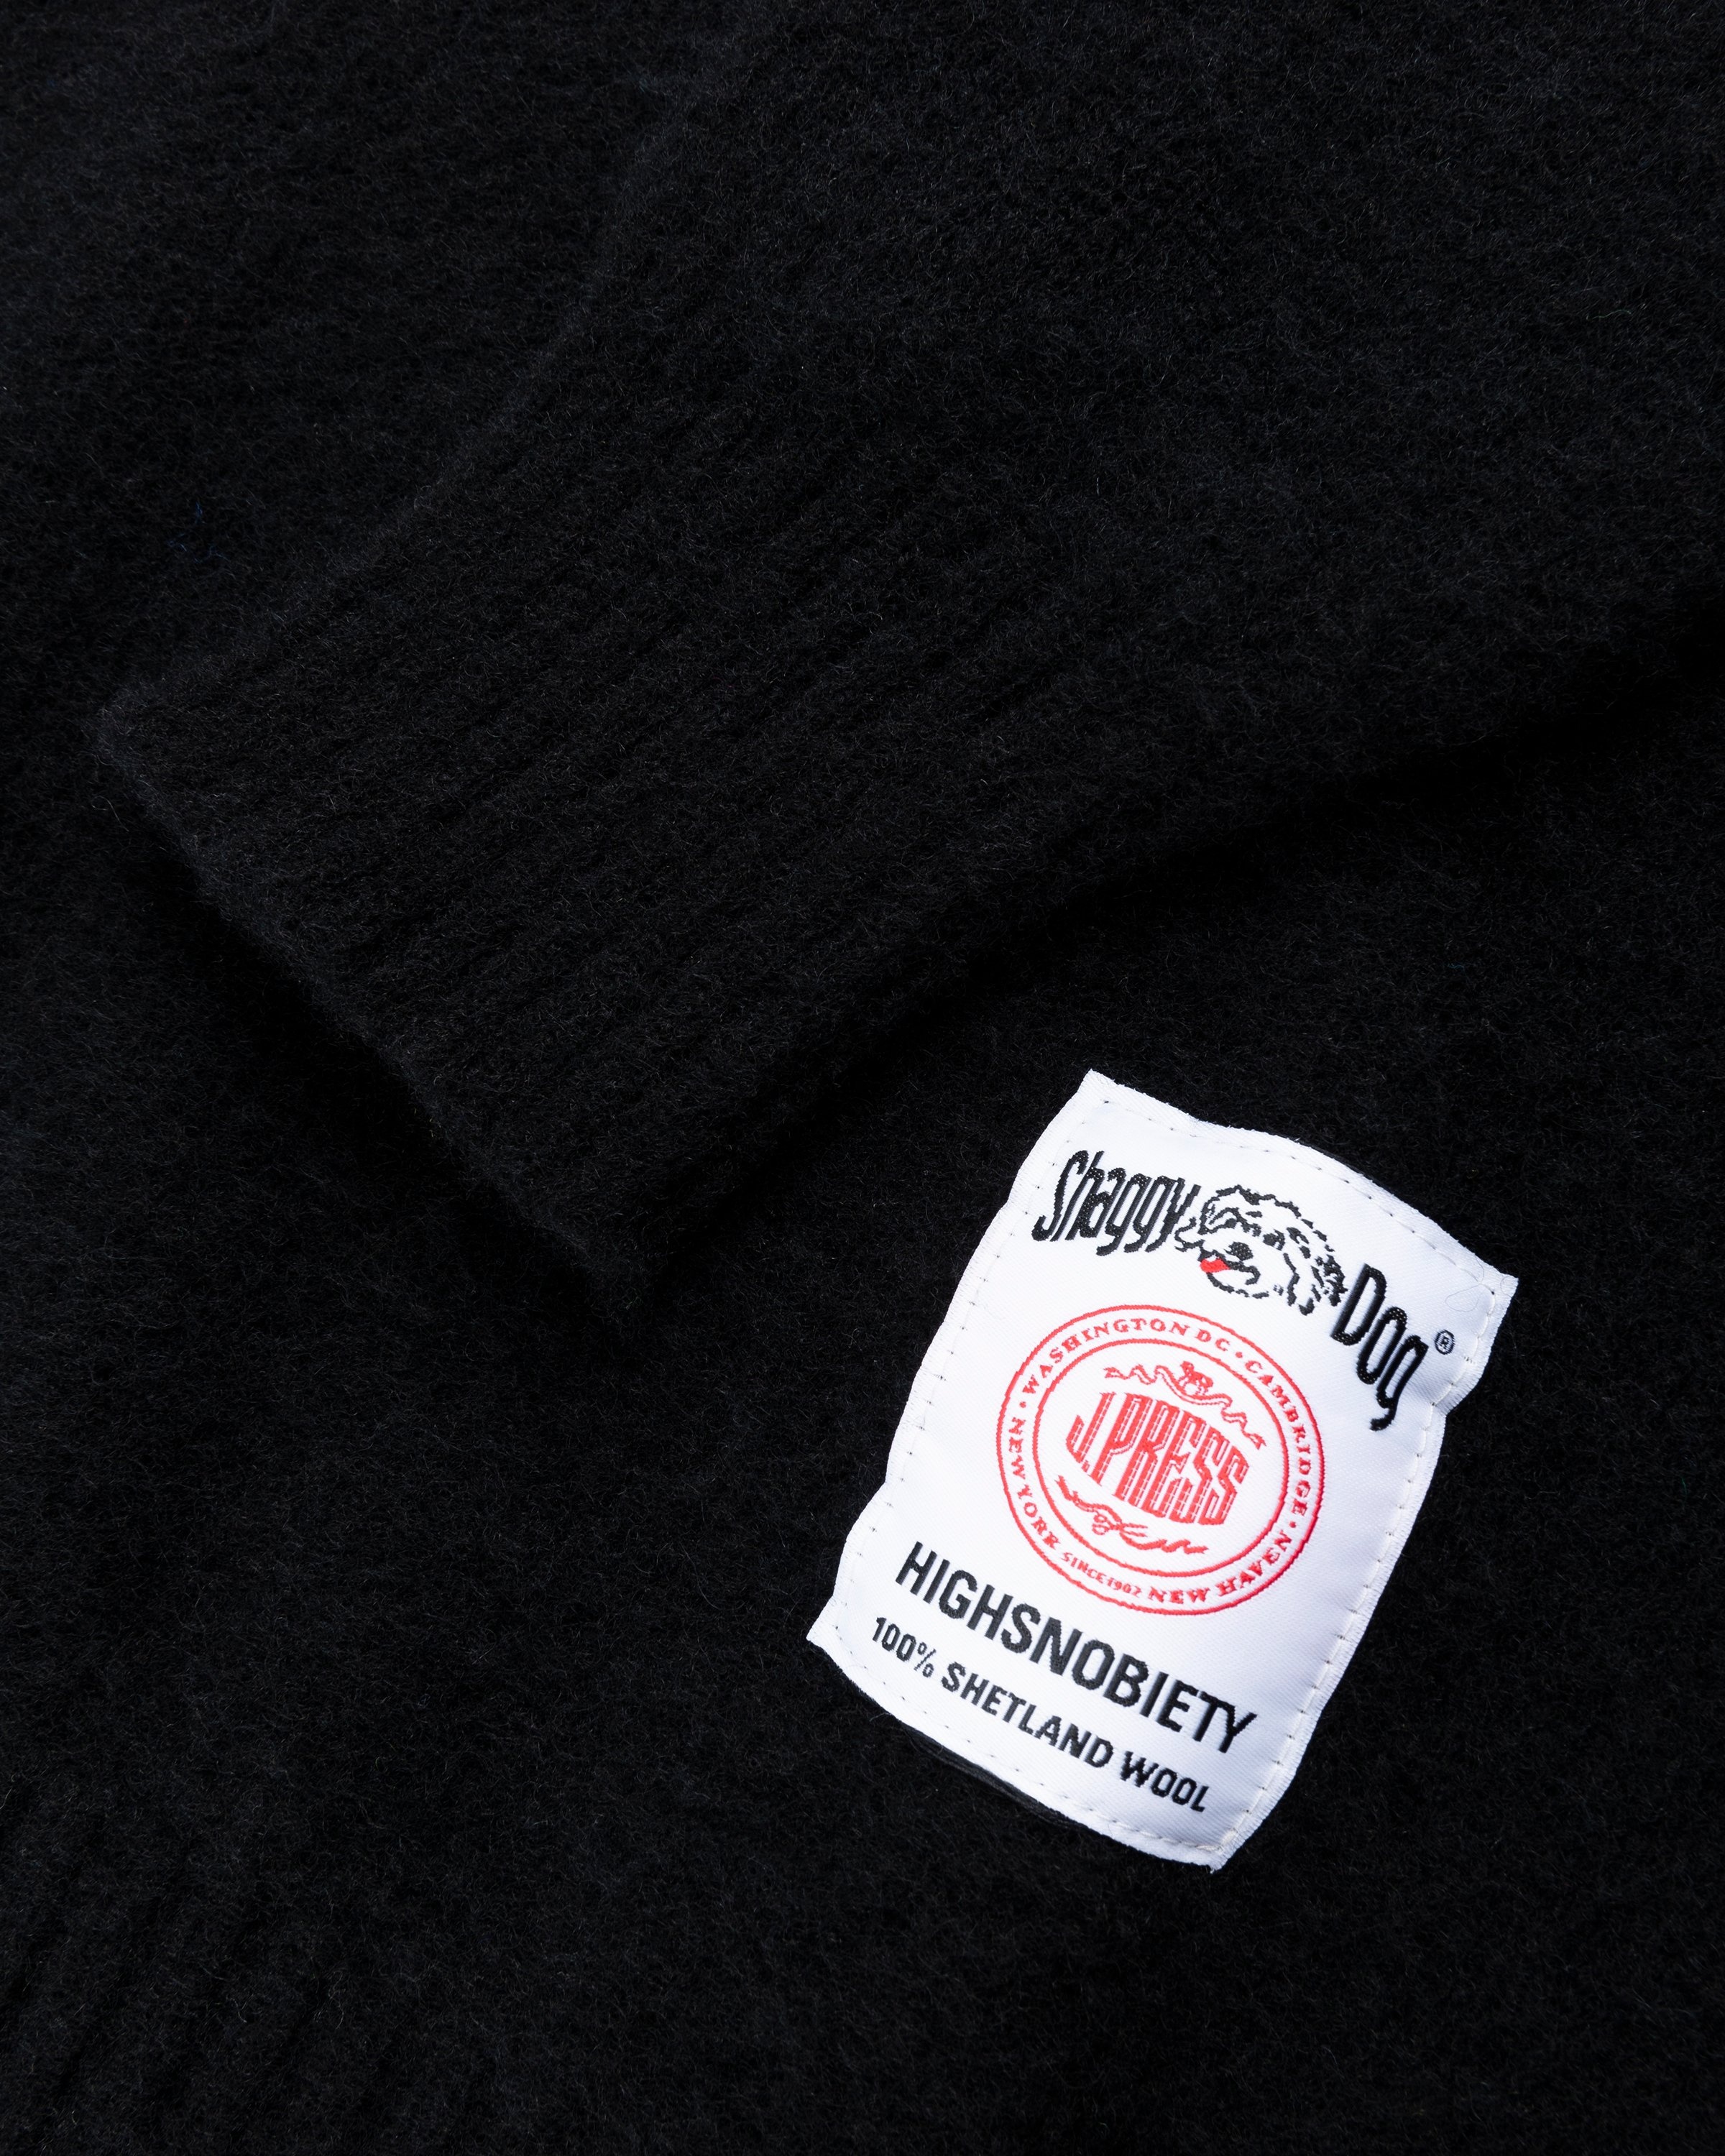 J. Press x Highsnobiety – Shaggy Dog Solid Sweater Black - Crewnecks - Black - Image 5